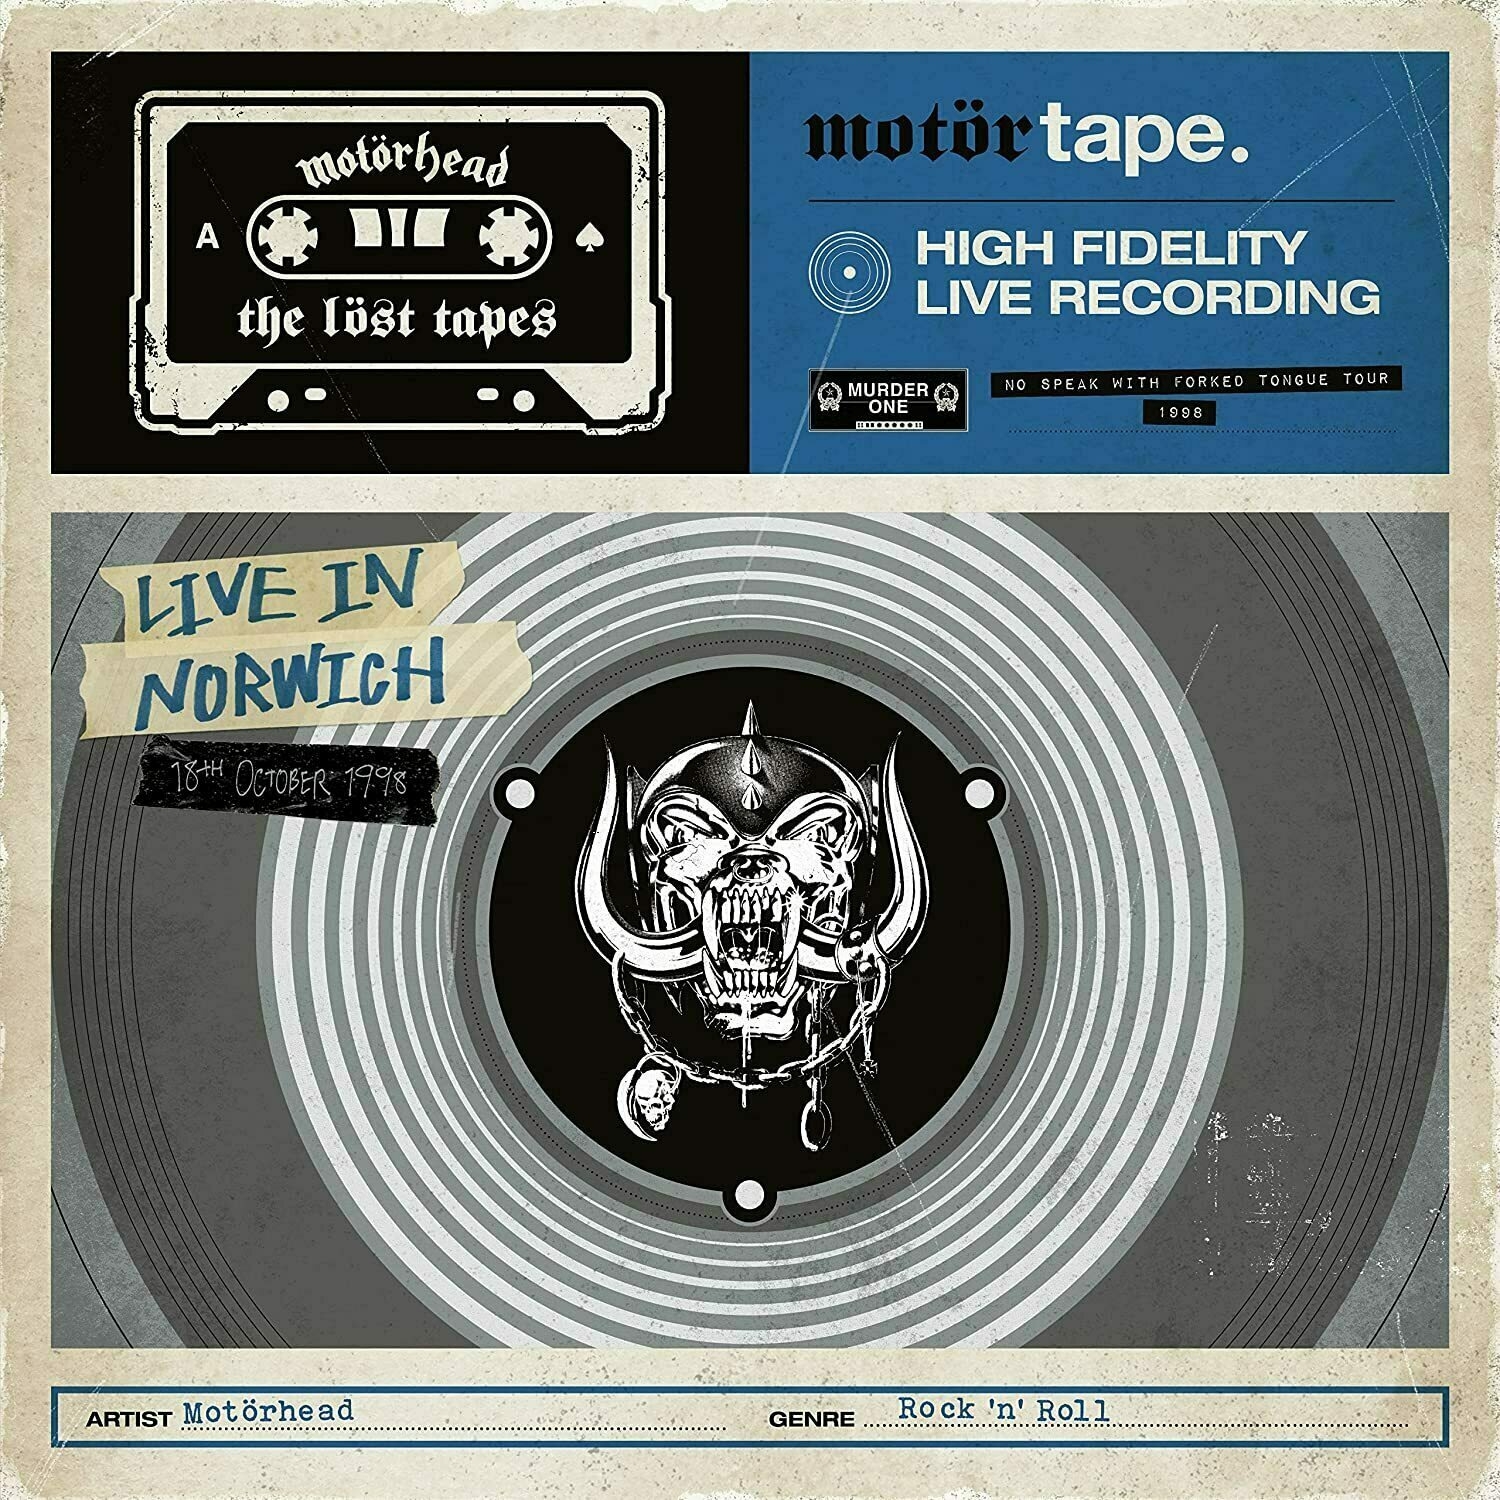 Виниловая Пластинка Motorhead The Lost Tapes Vol. 2 (Live In Norwich 1998) (4050538707762) виниловая пластинка motorhead the lost tapes vol 2 rsd 2022 blue 2 lp